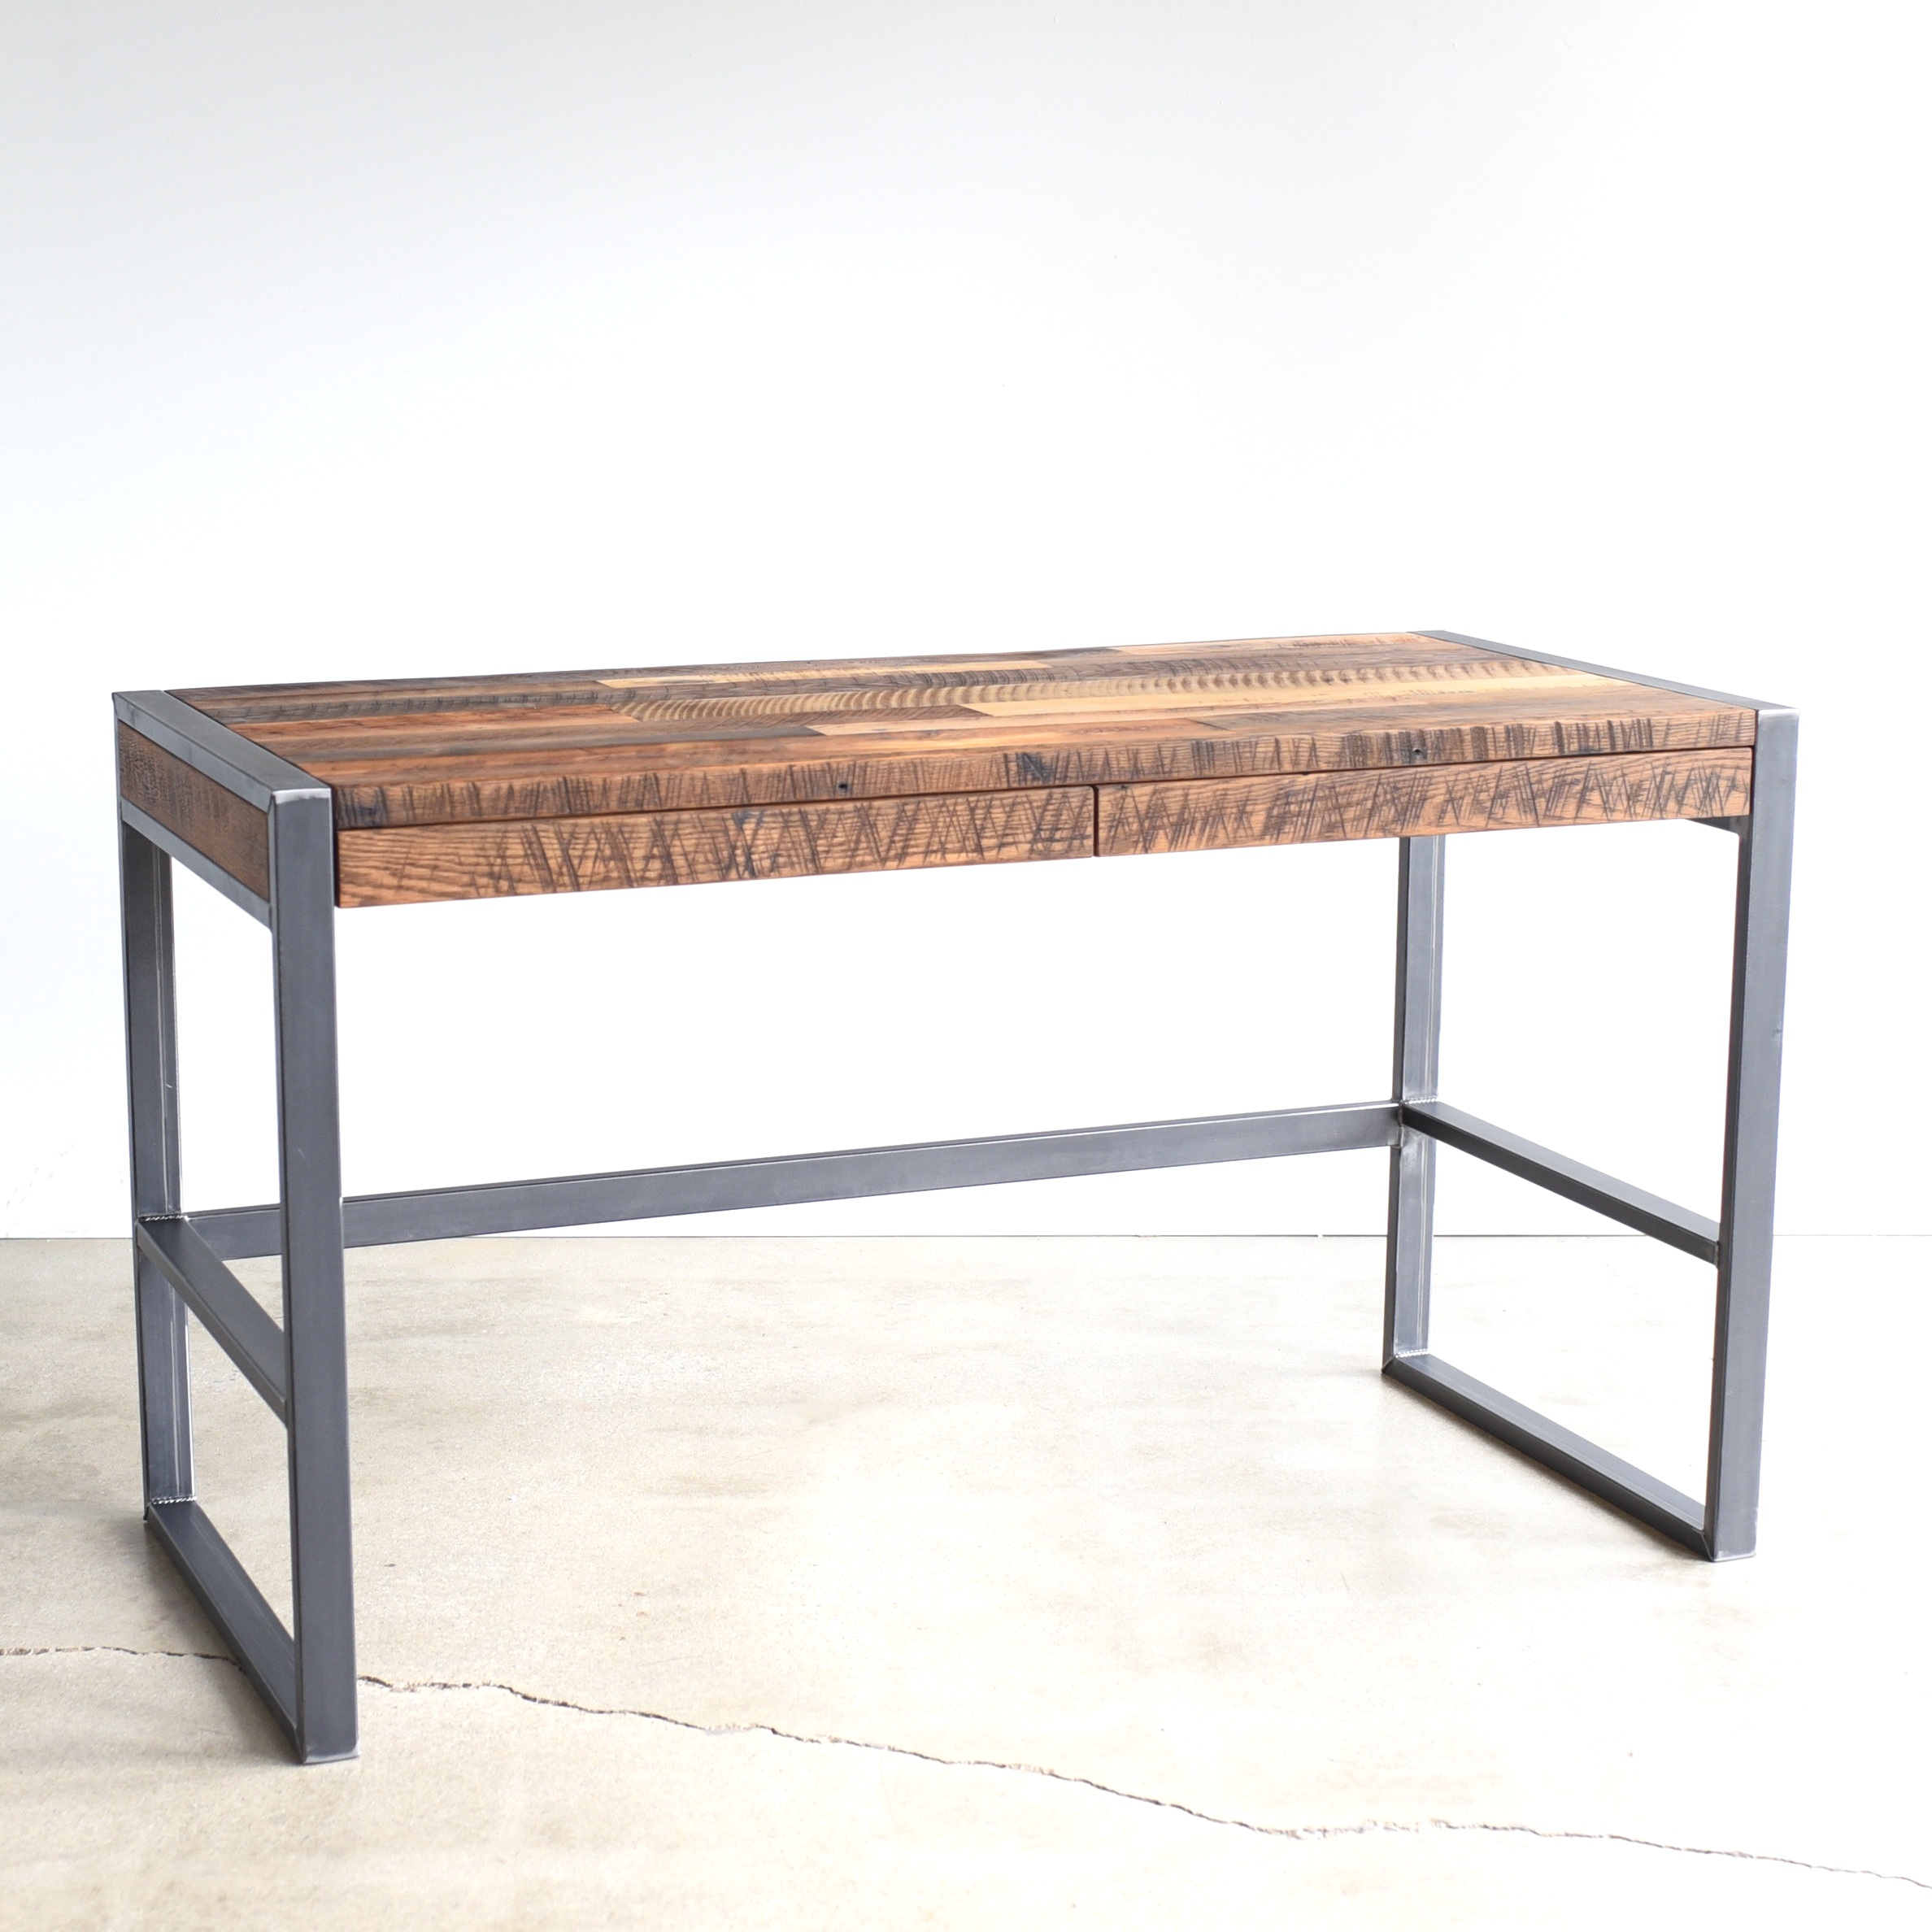 Reclaimed Wood Desk 2 Drawer What We Make